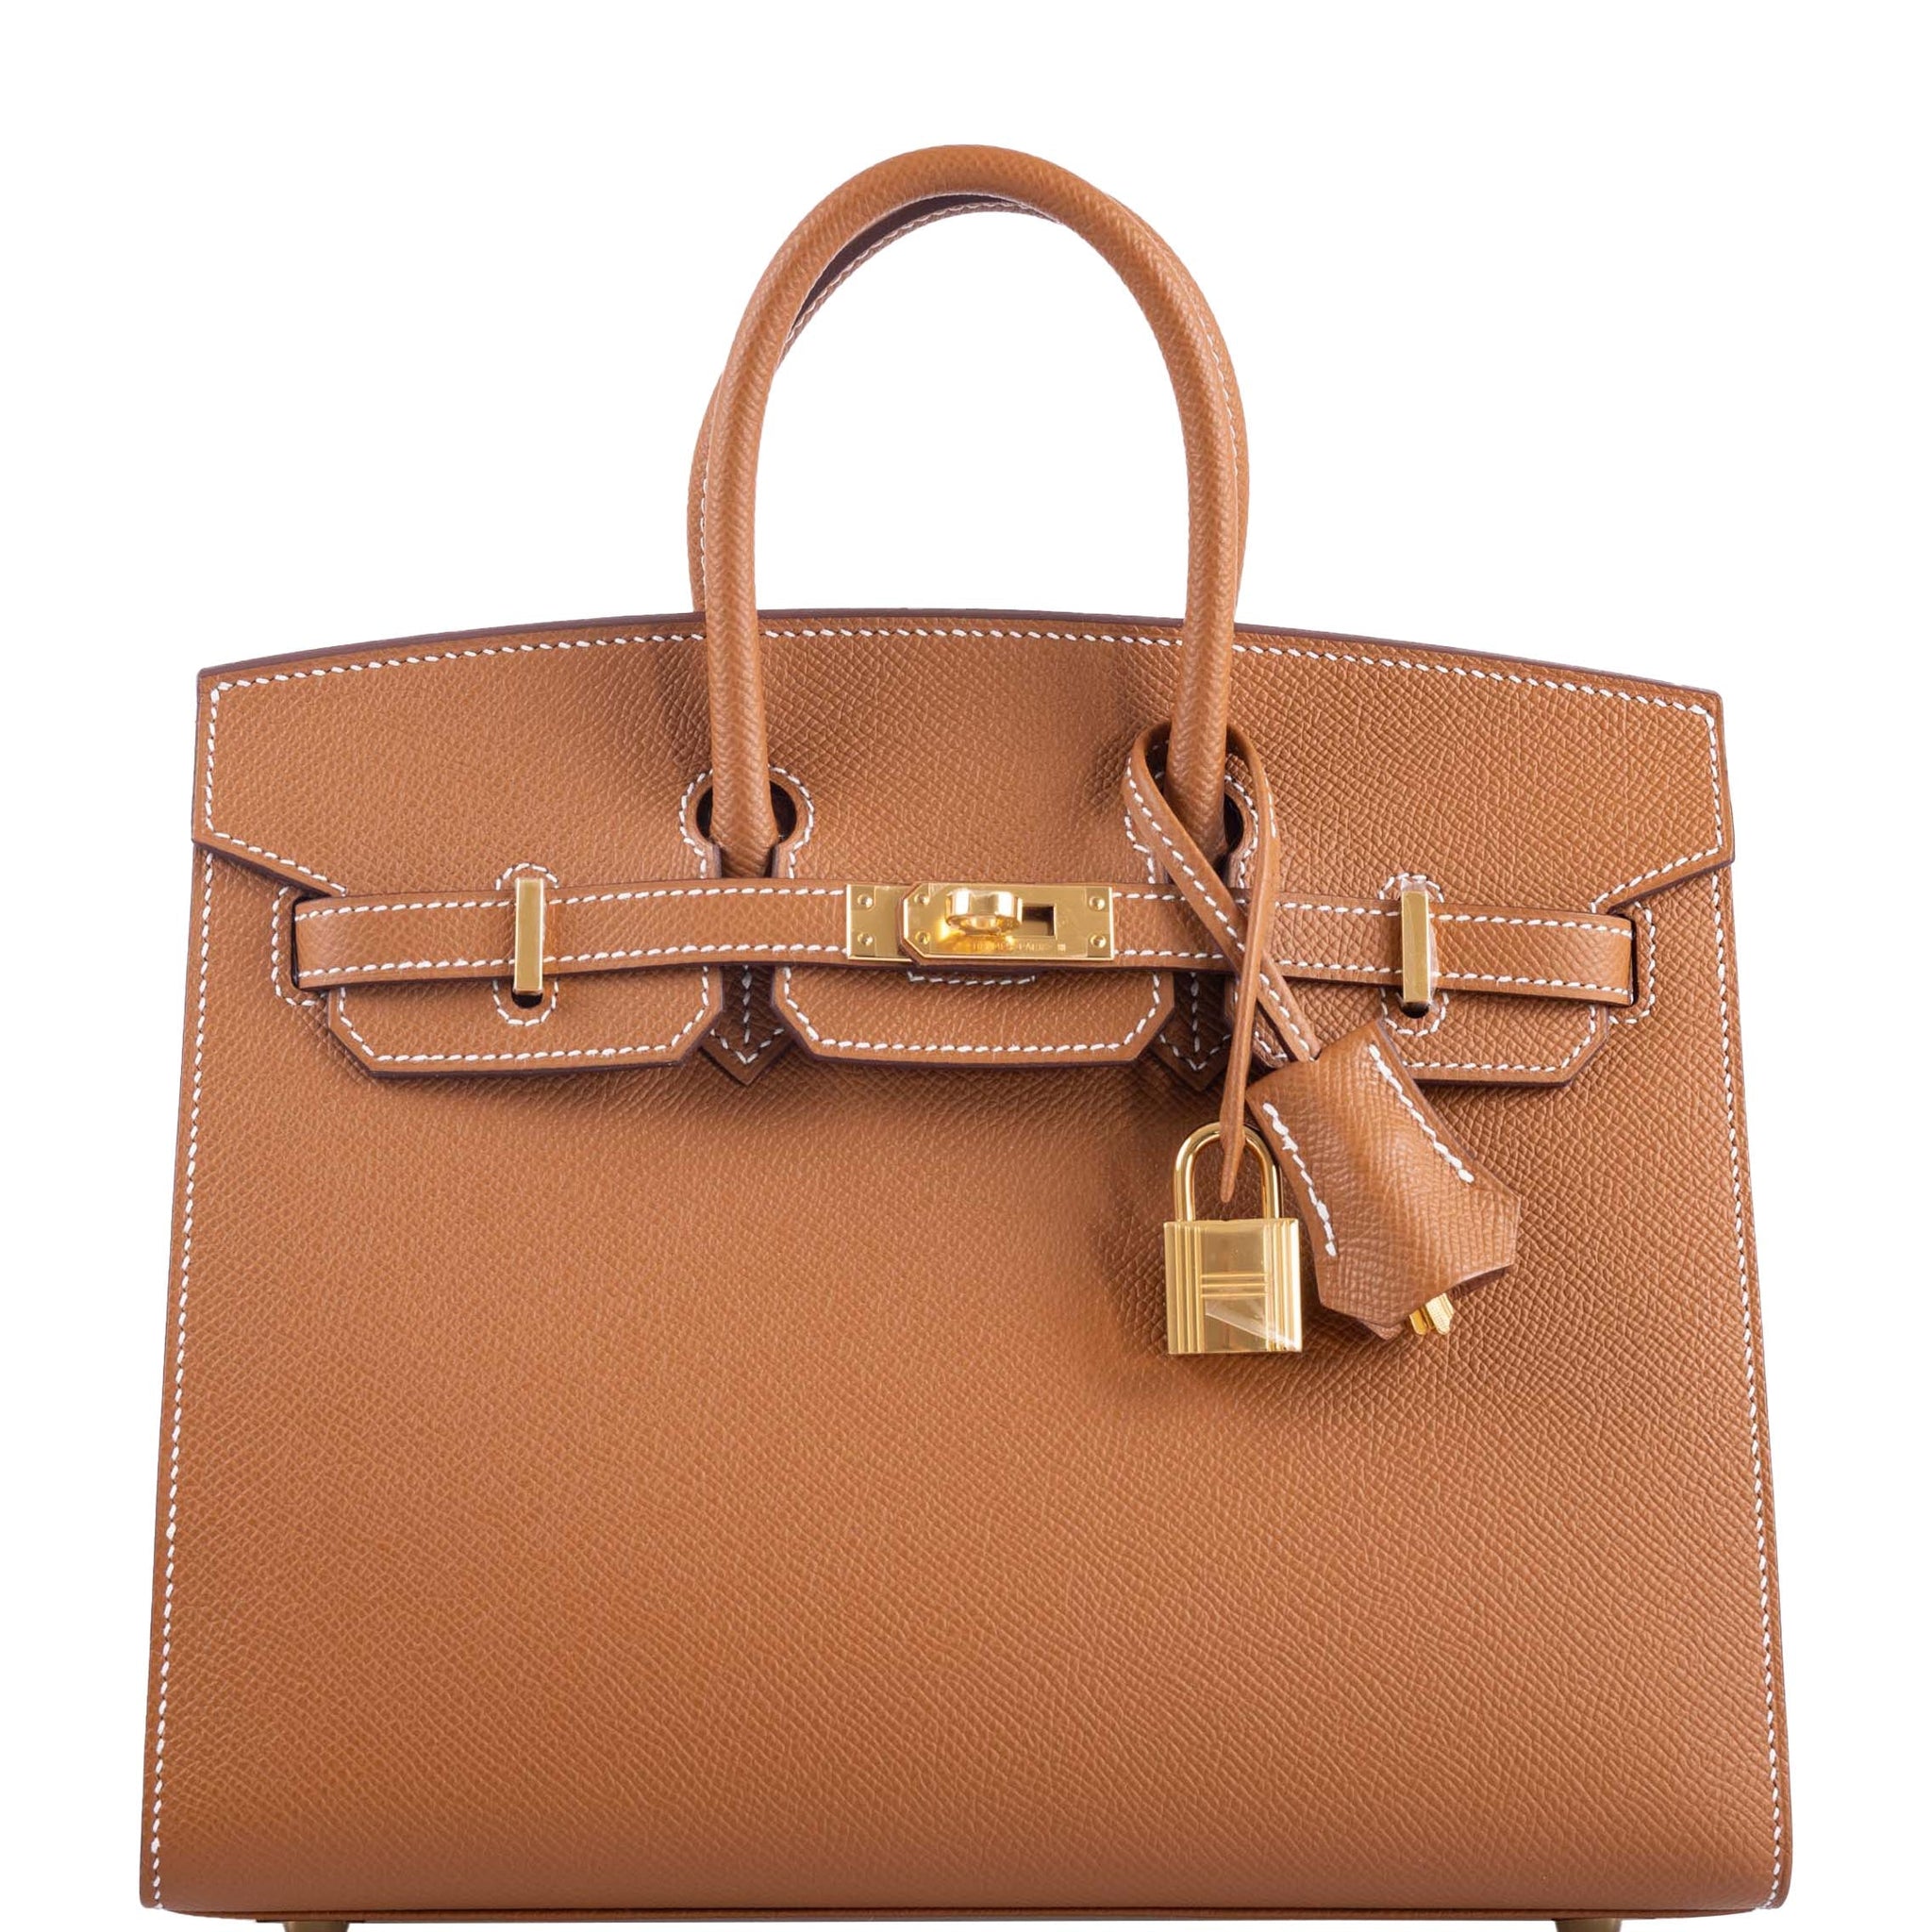 Hermes Birkin 25 Sellier Gold Bag